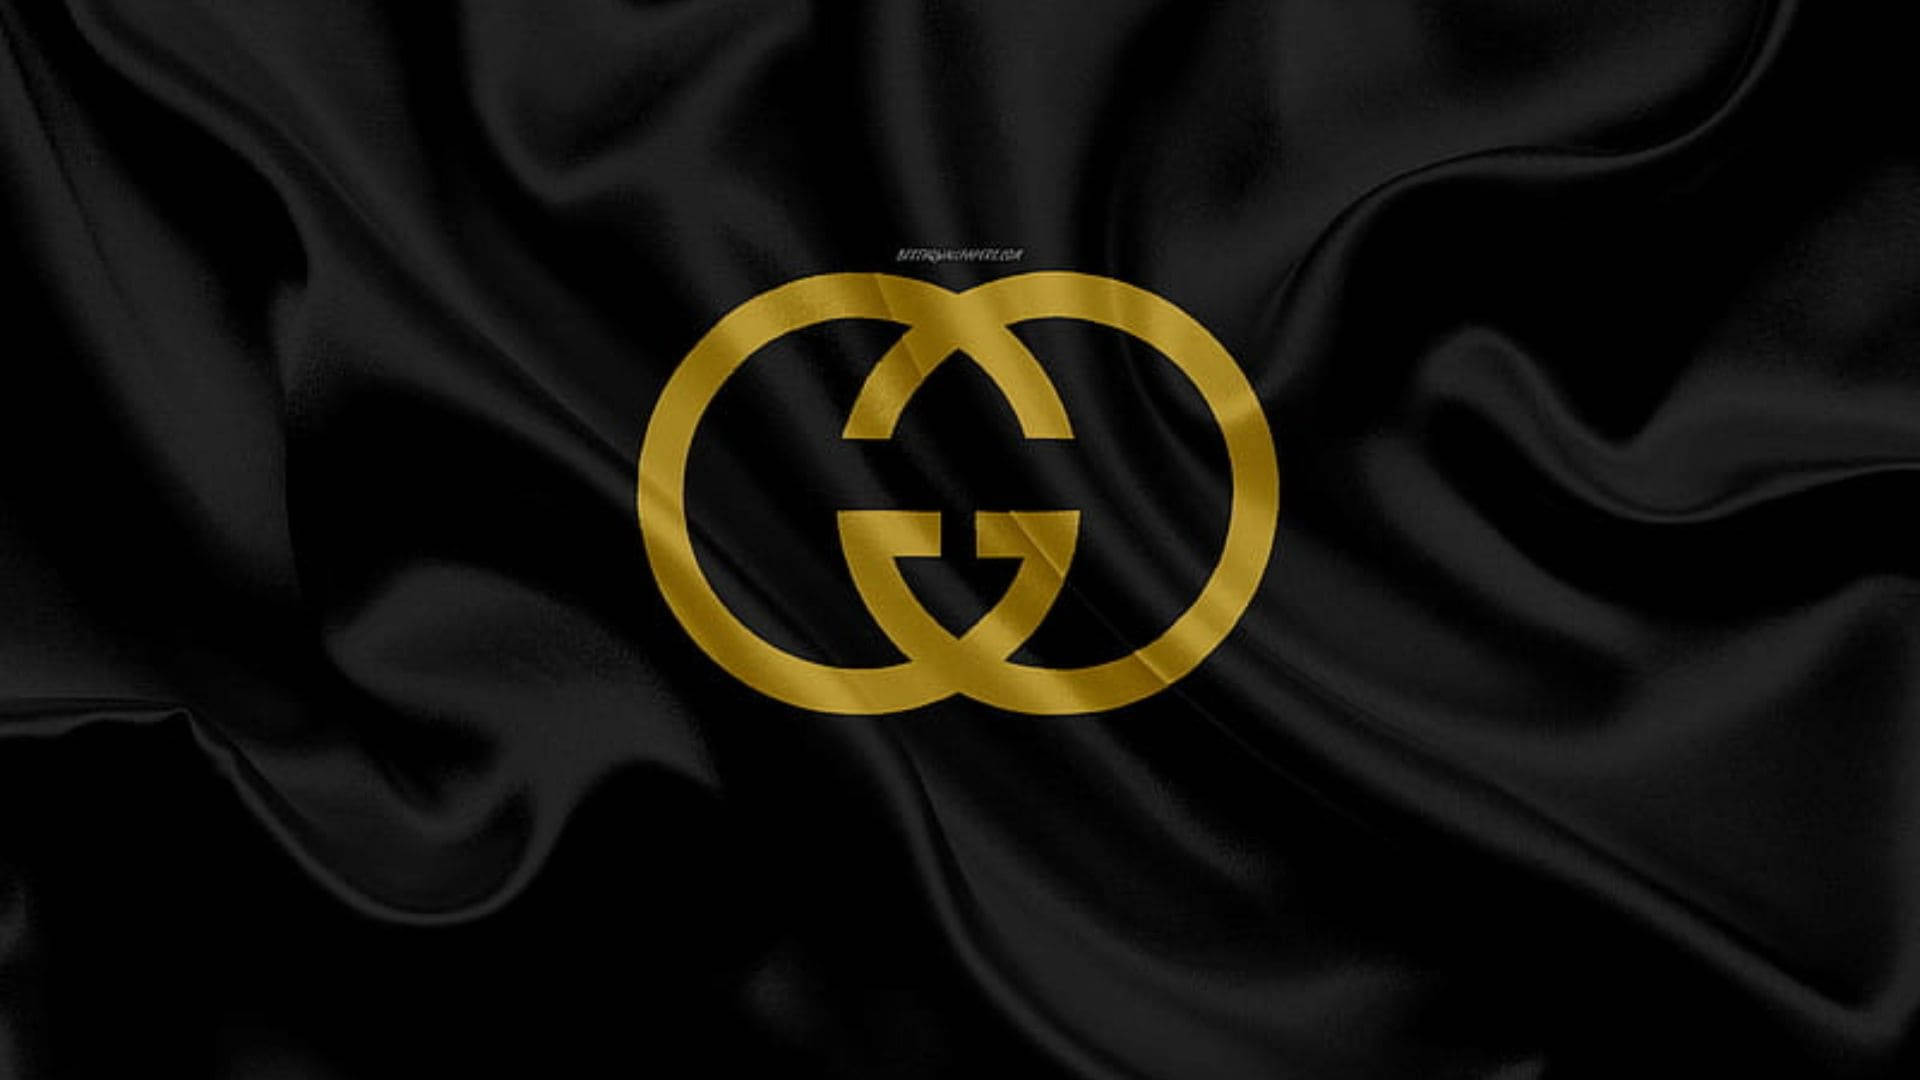 Gold Satin Black Gucci 4k Wallpaper